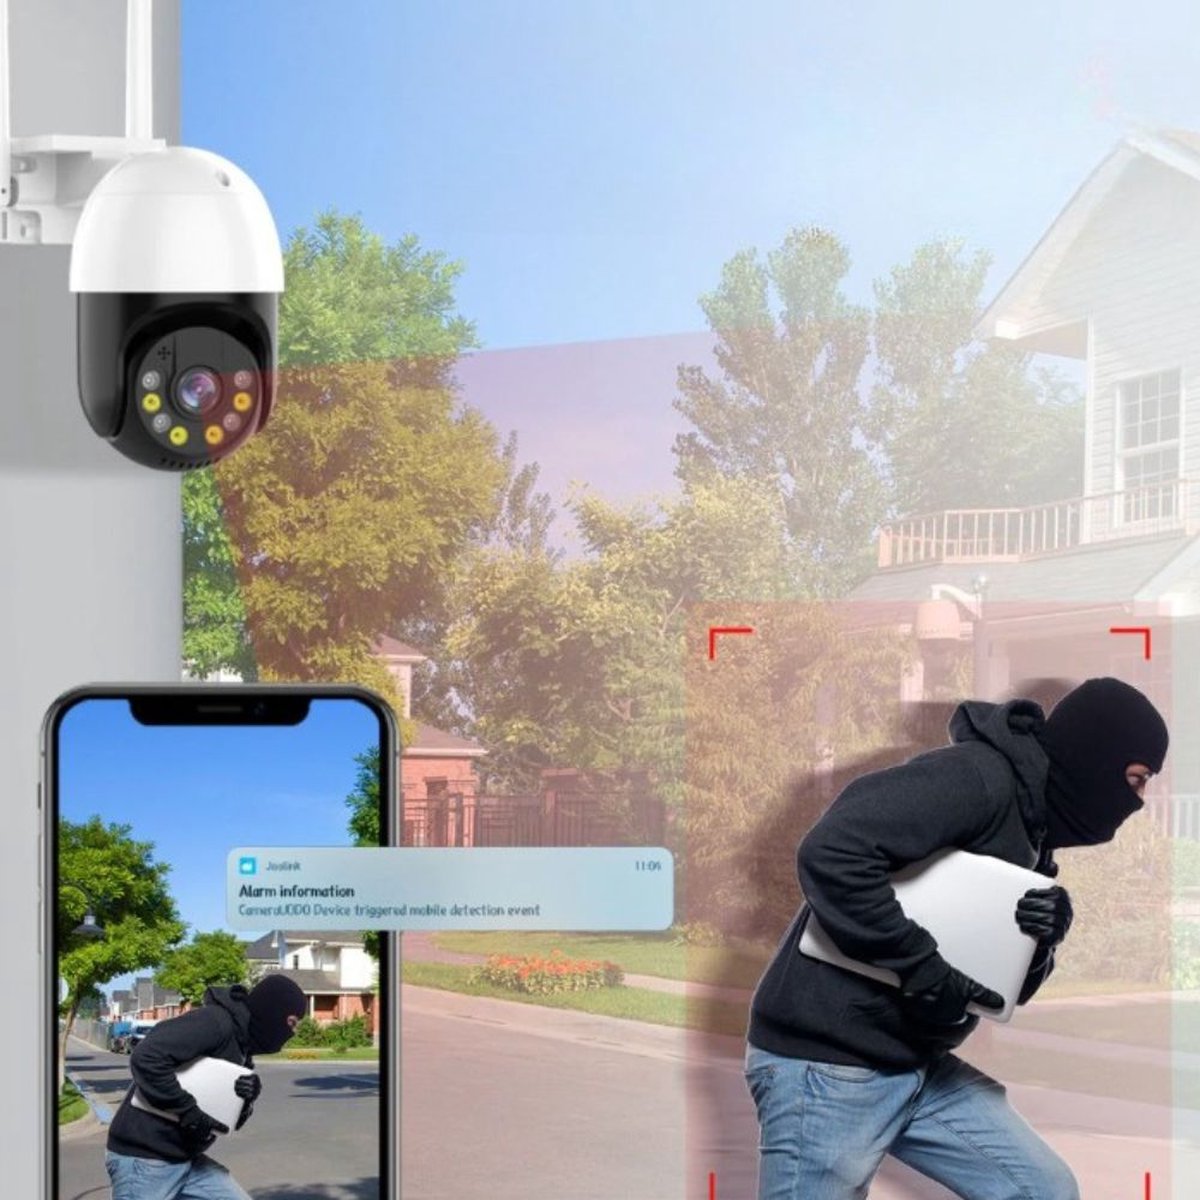 Beveiligingscamera met 64 gb geheugenkaart - Home Security Camera Systeem - Wifi Camera Set - Video + Audio-opname - Beveiligingscamera - Nachtzicht - Motion Detector